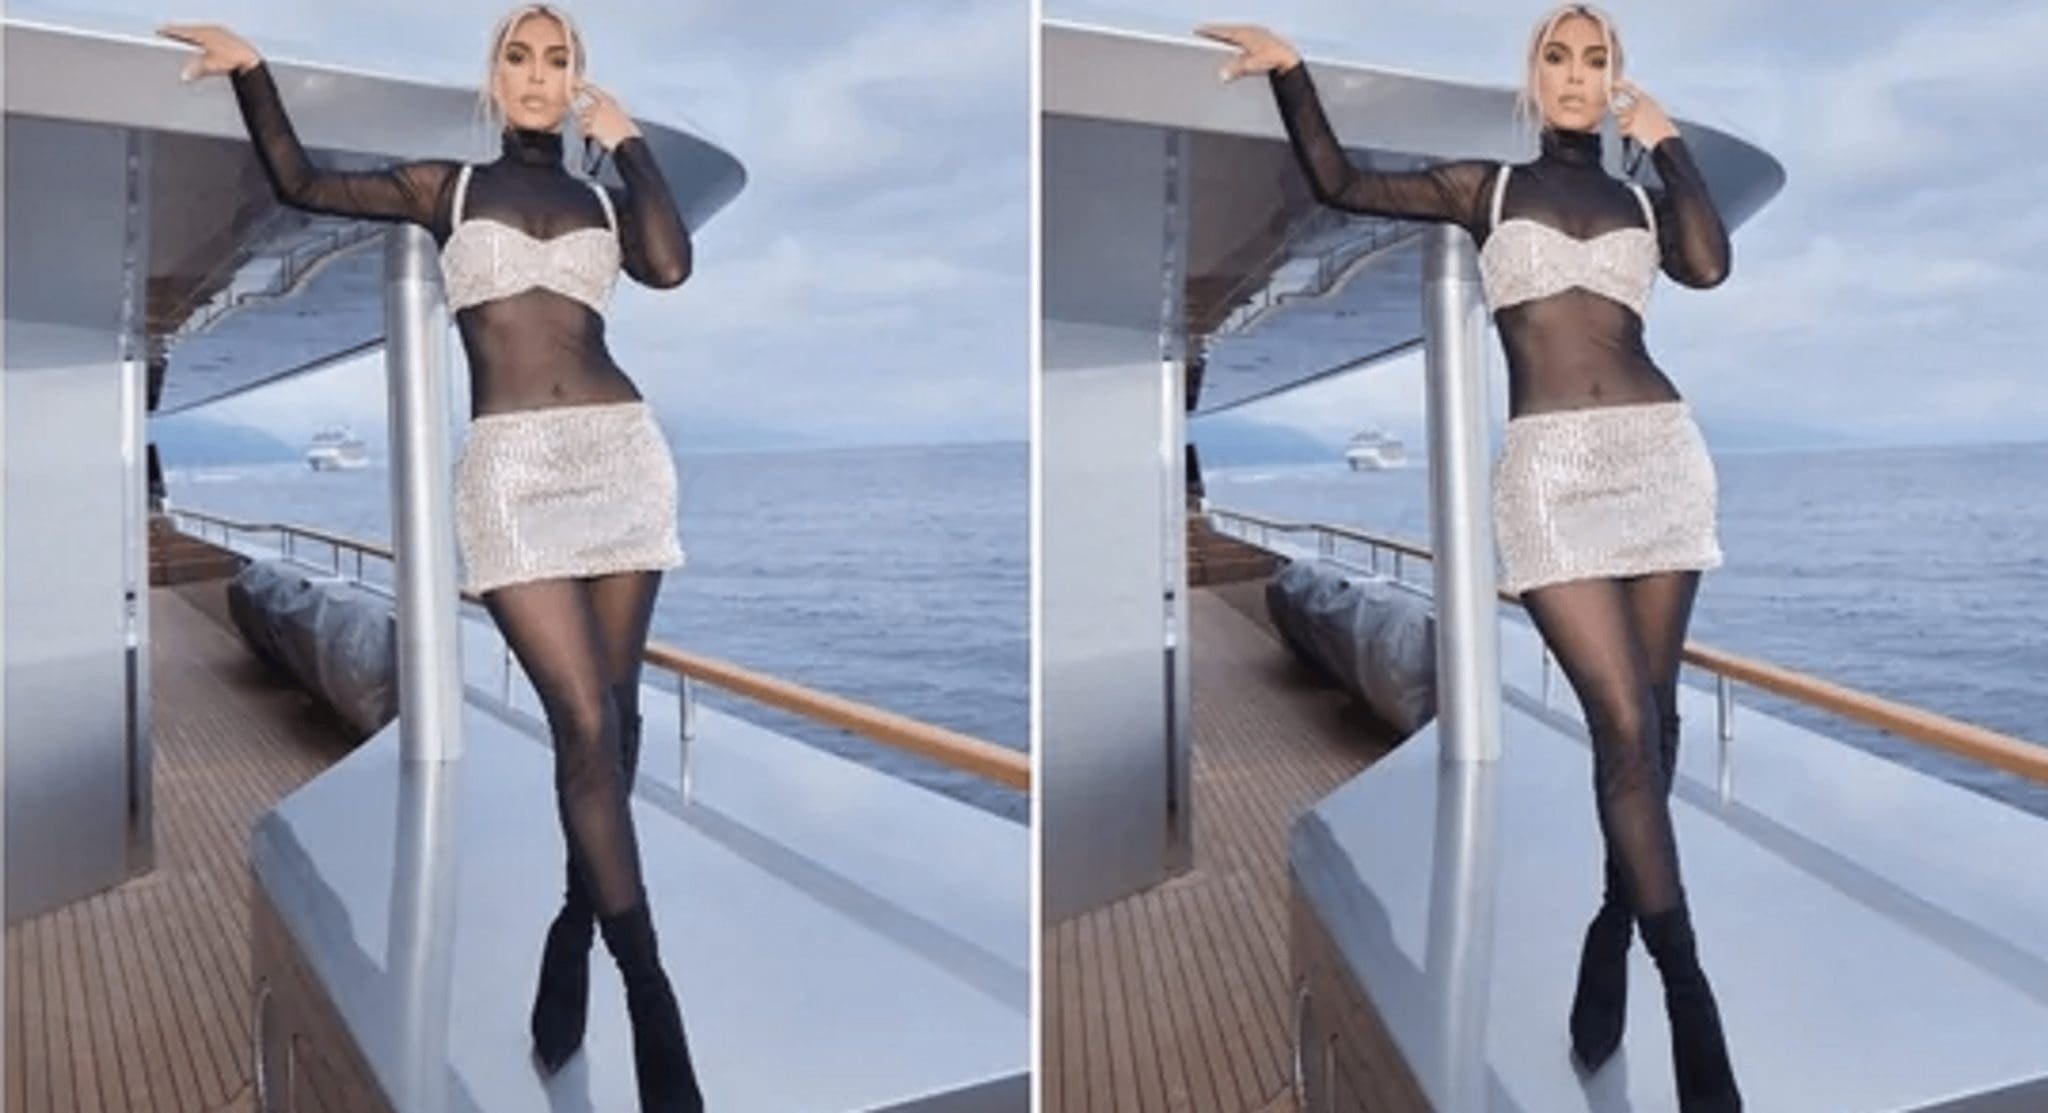 Kim Kardashian has found a new effective way to wear a miniskirt and revealing top